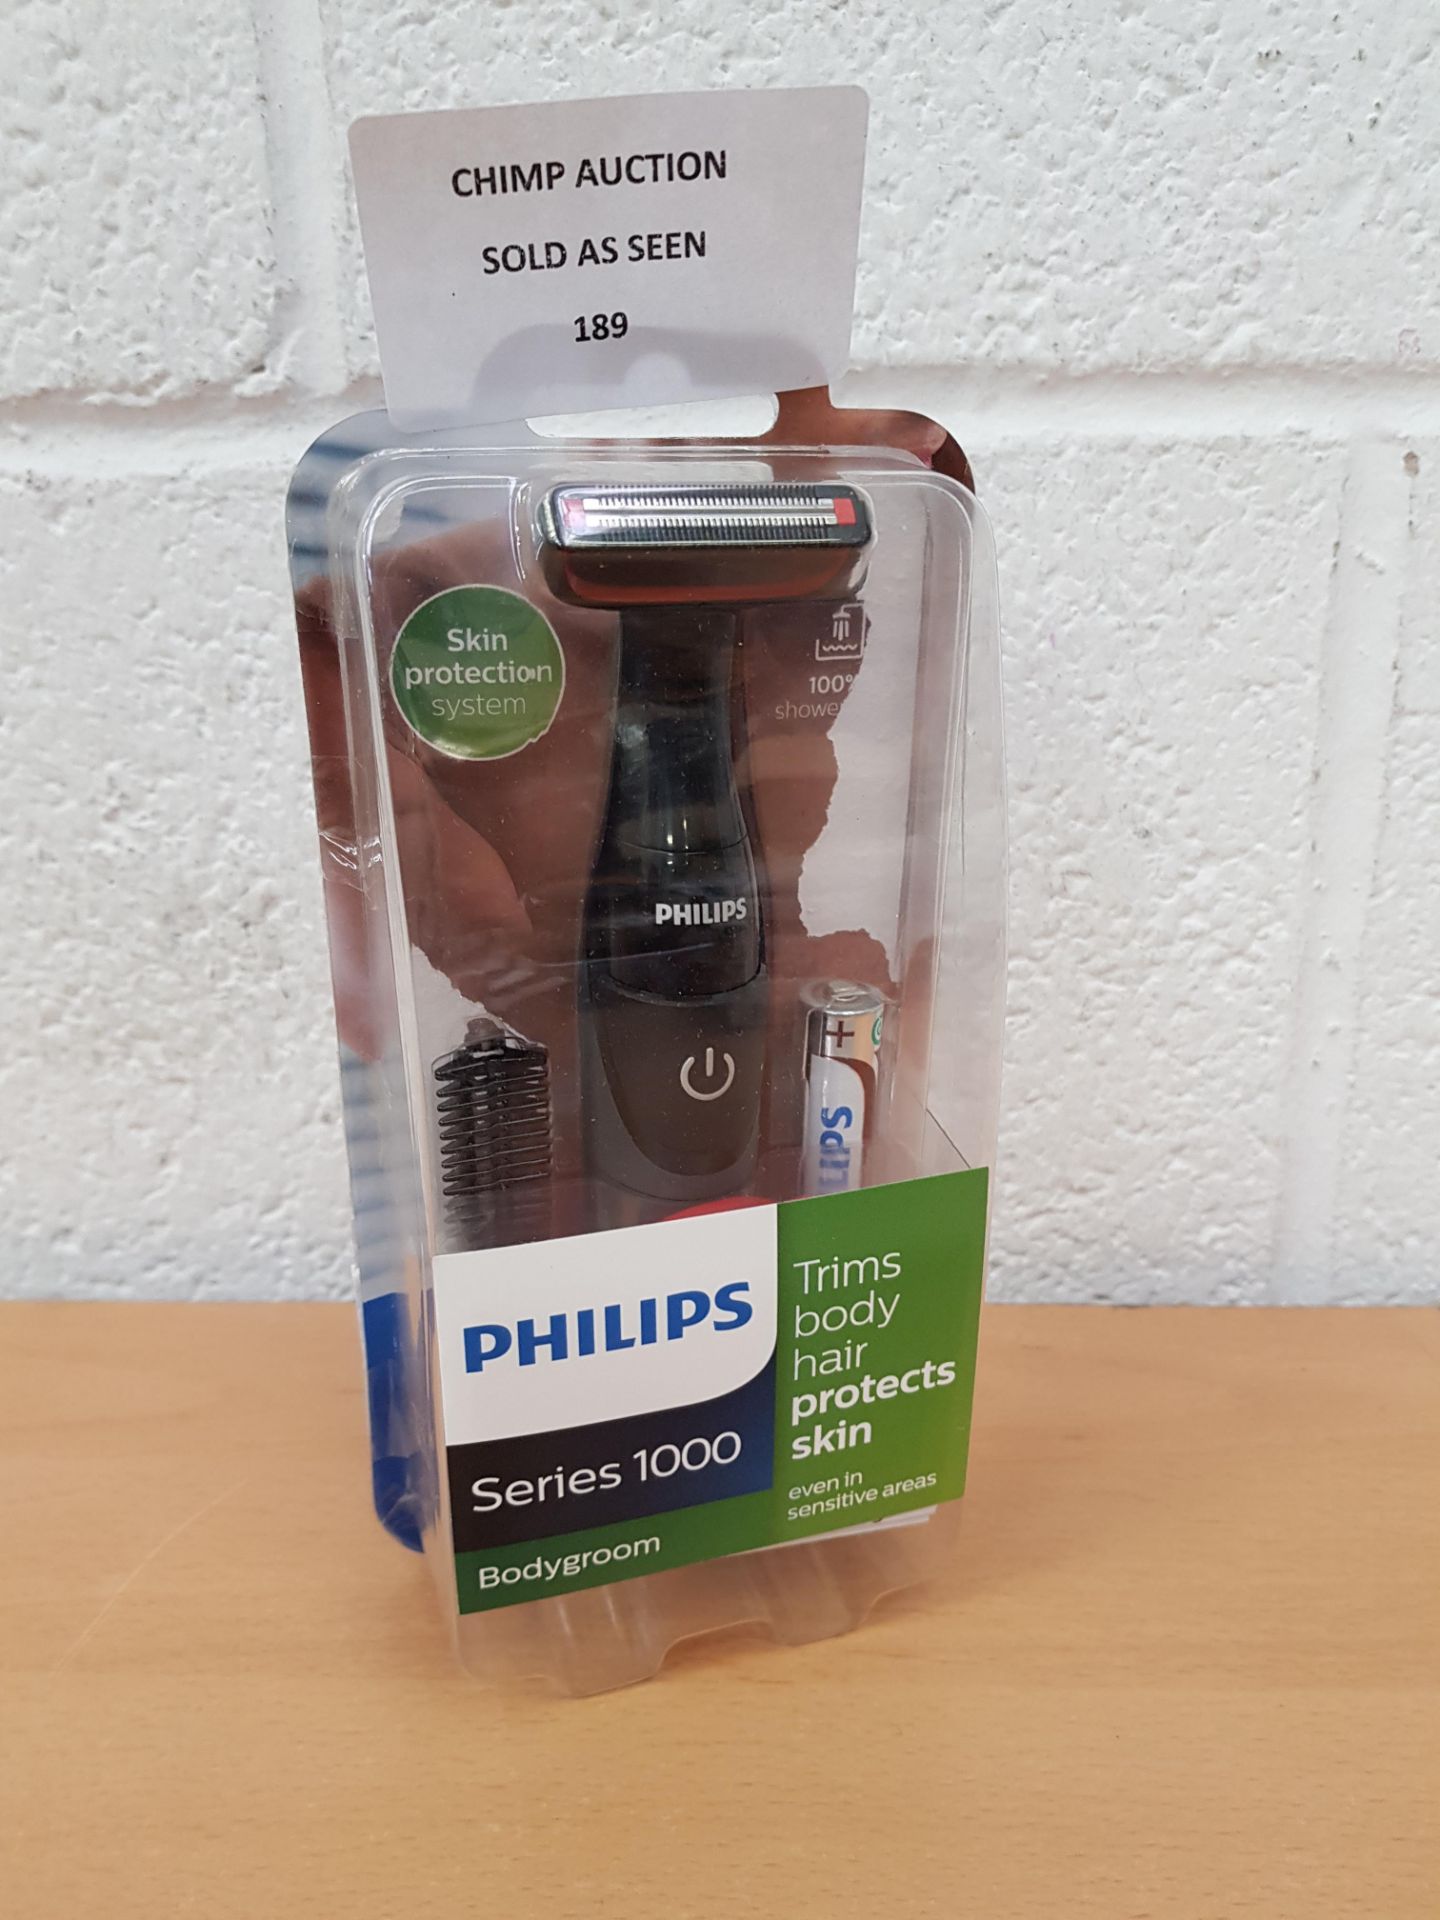 Philips Series 1000 BodyGroom Body trimmer